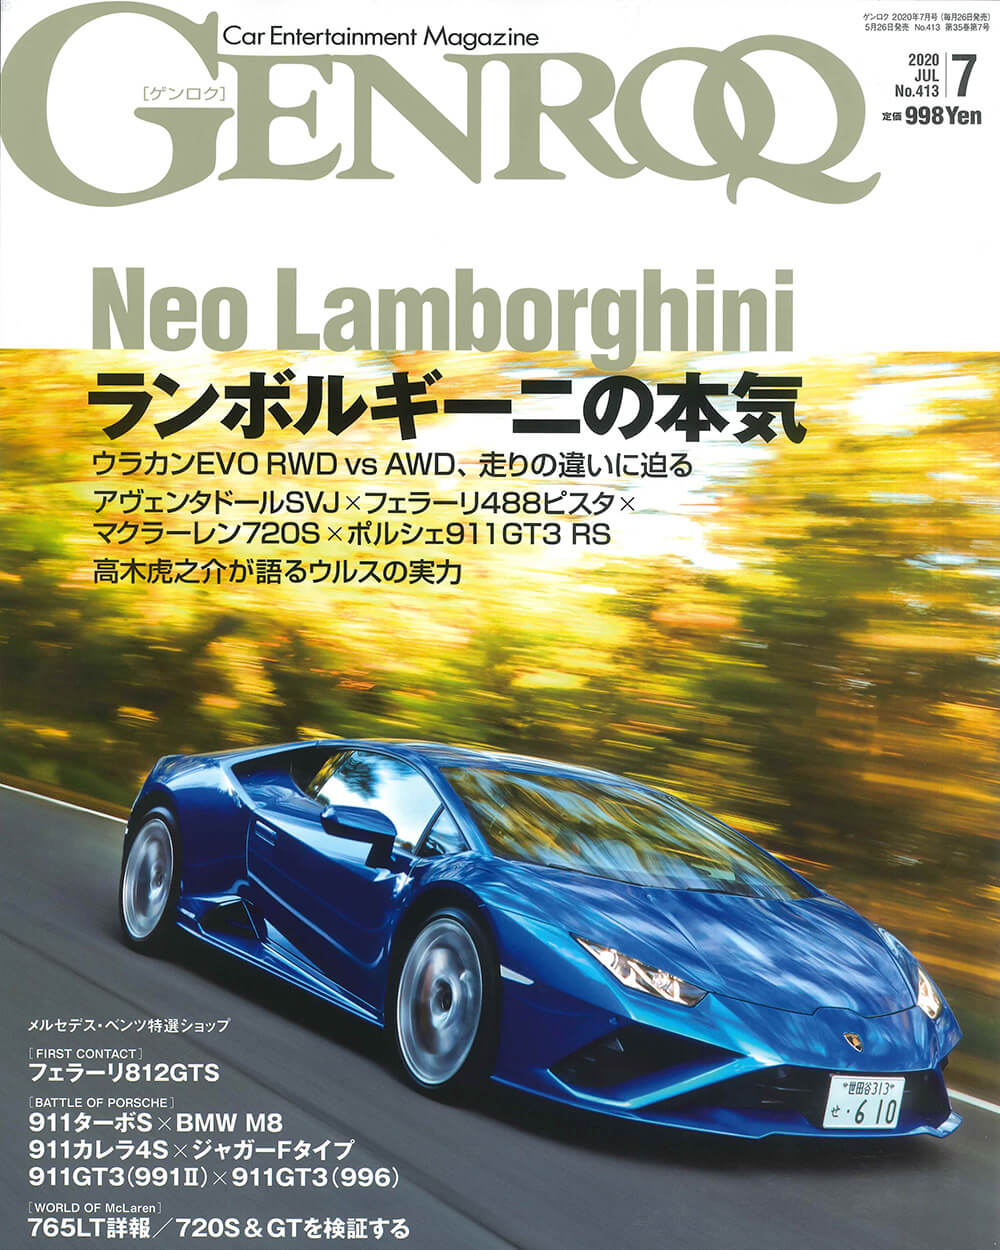 GENROQ Jul. issue